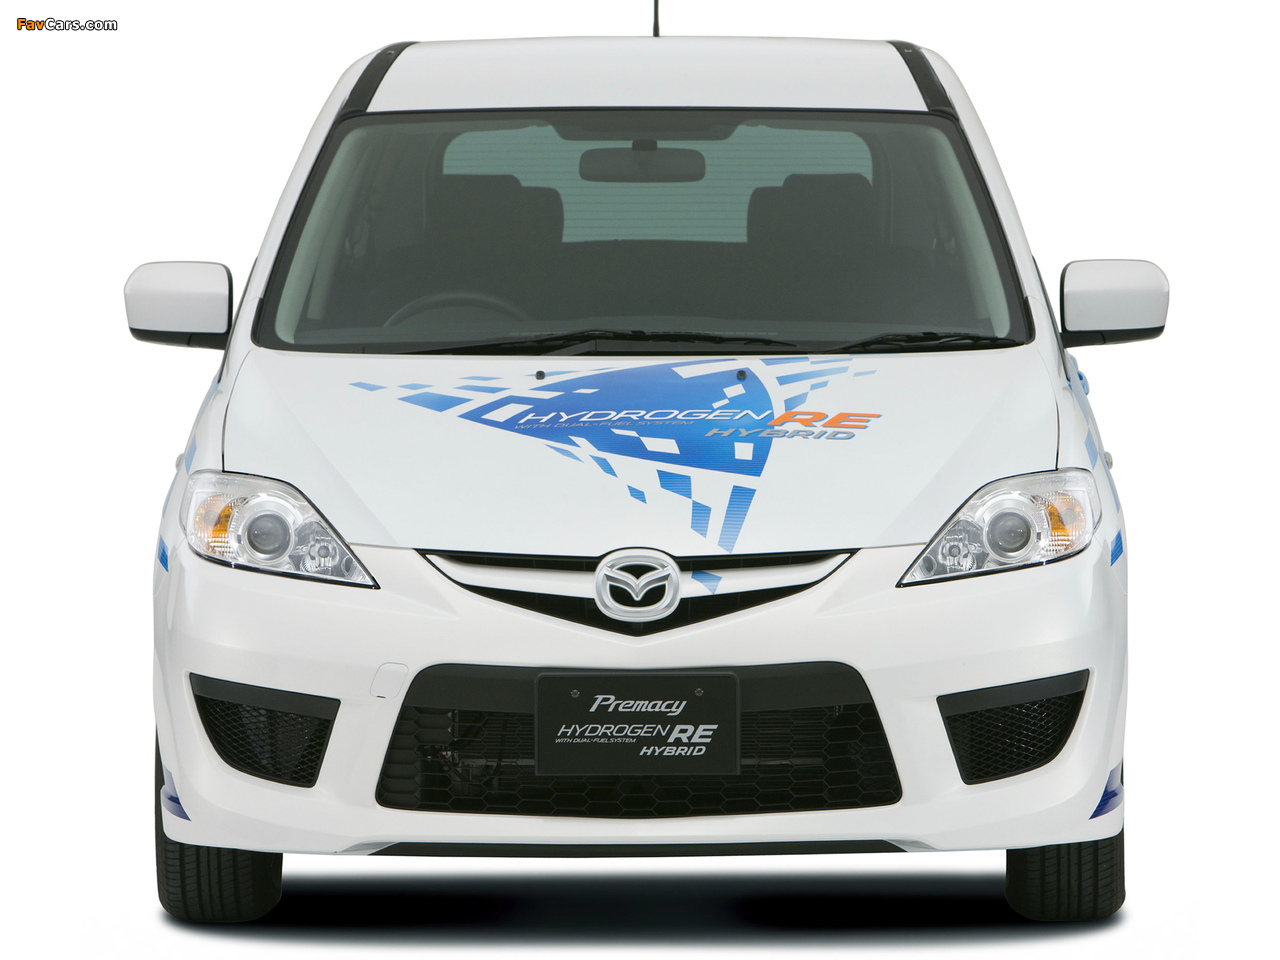 Mazda Premacy Hydrogen RE 2009 pictures (1280 x 960)